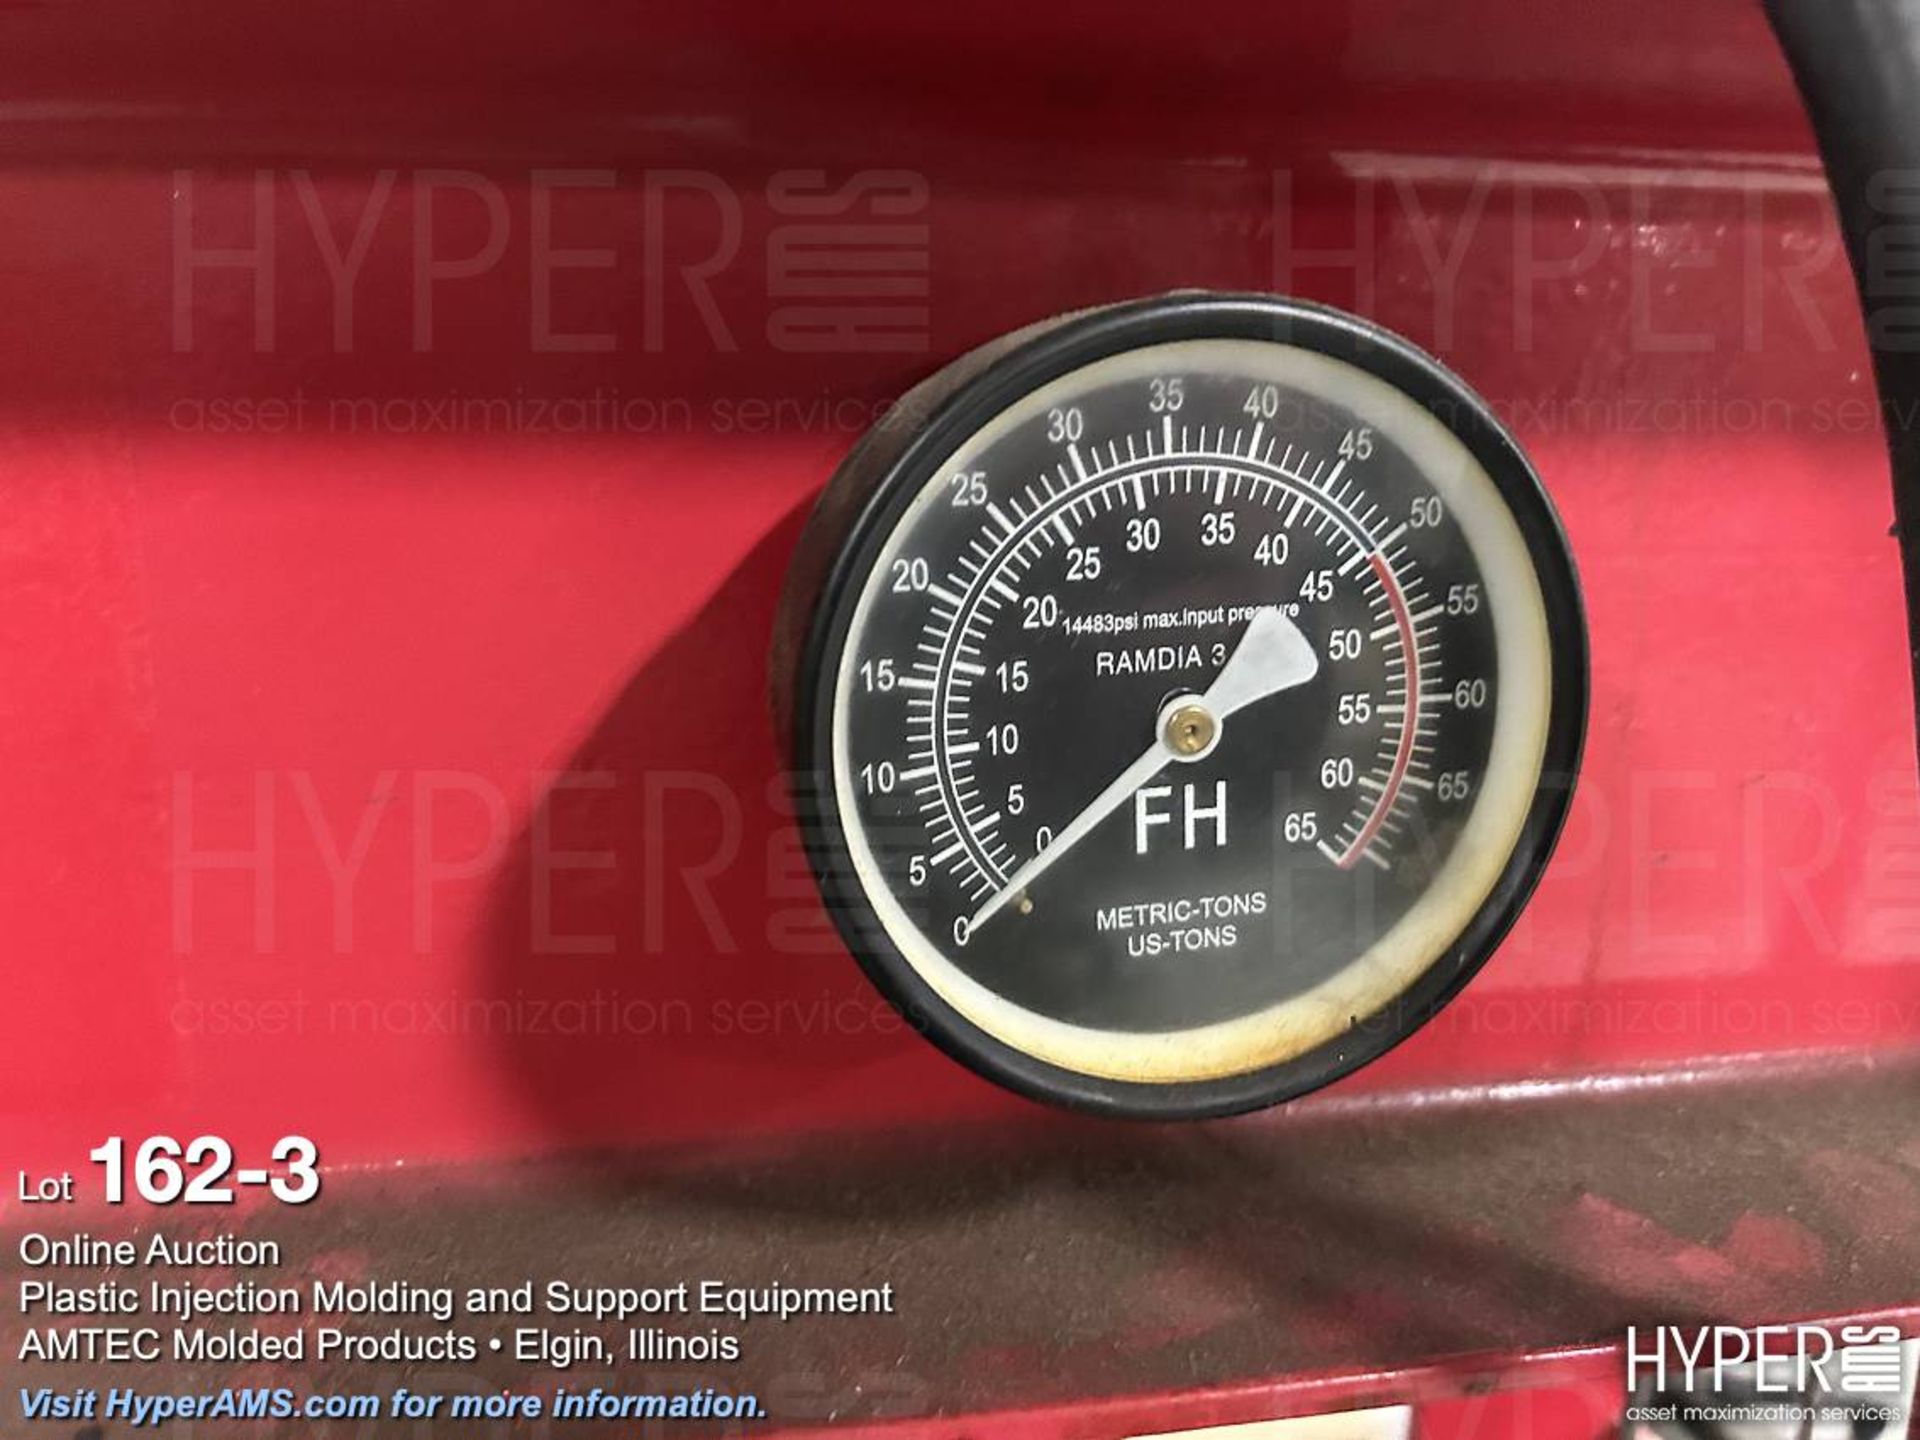 H-Frame hydraulic press - Image 3 of 4